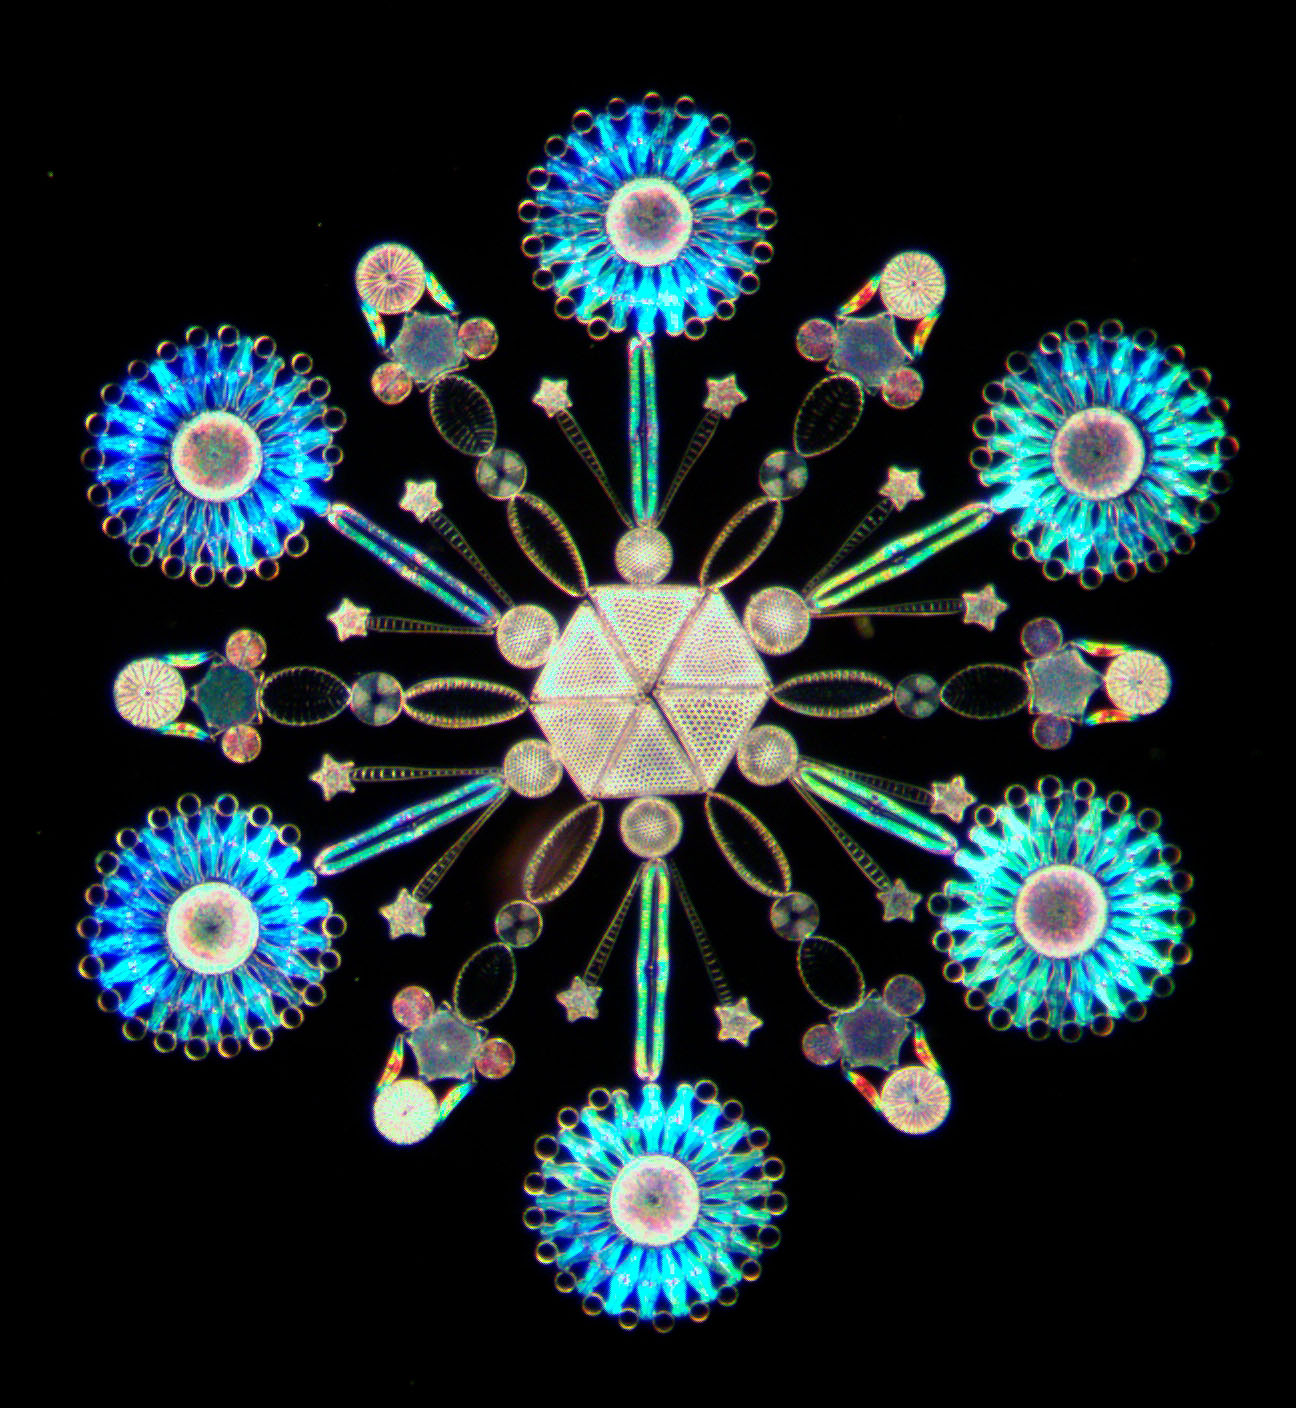 Diatom Arrangement like a snowflake